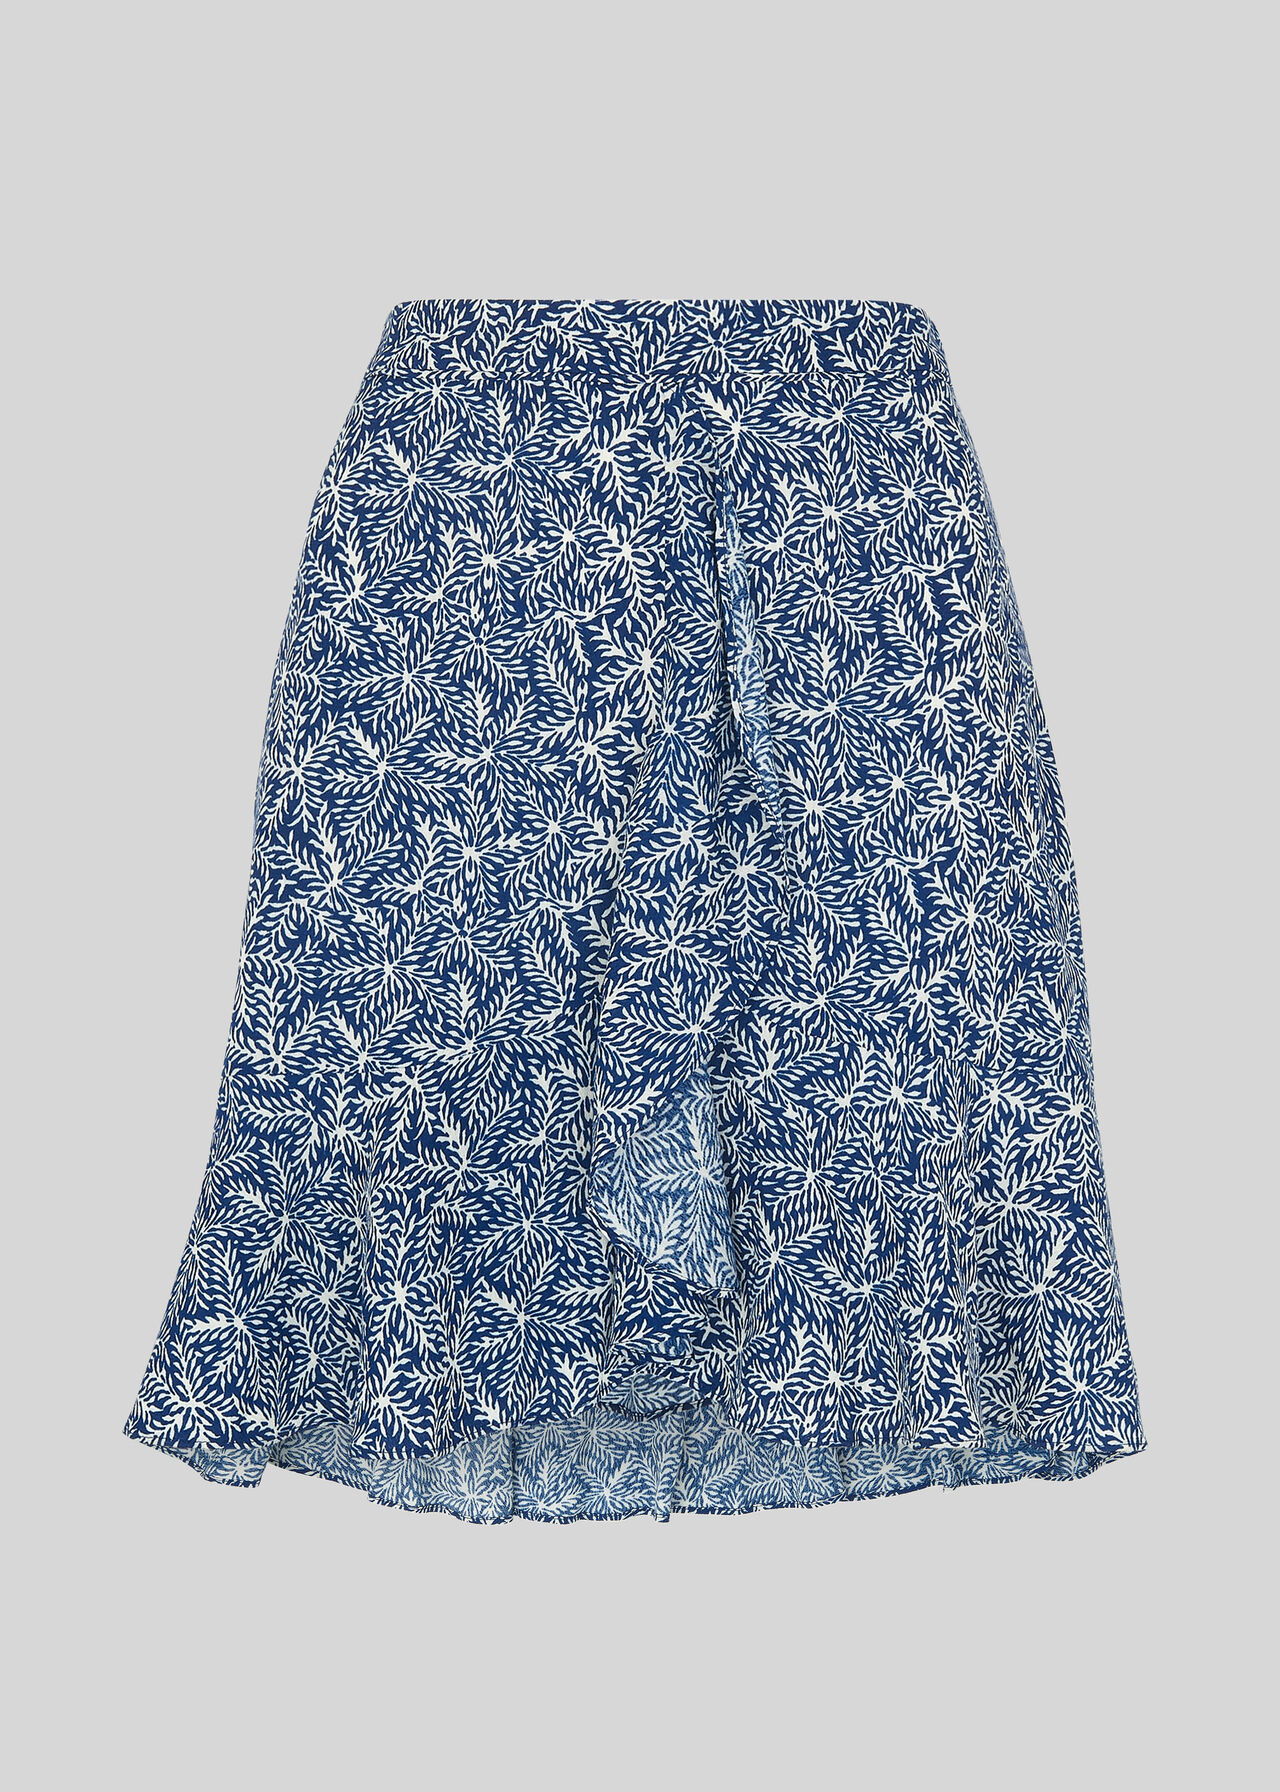 Etched Print Mini Skirt Navy/Multi